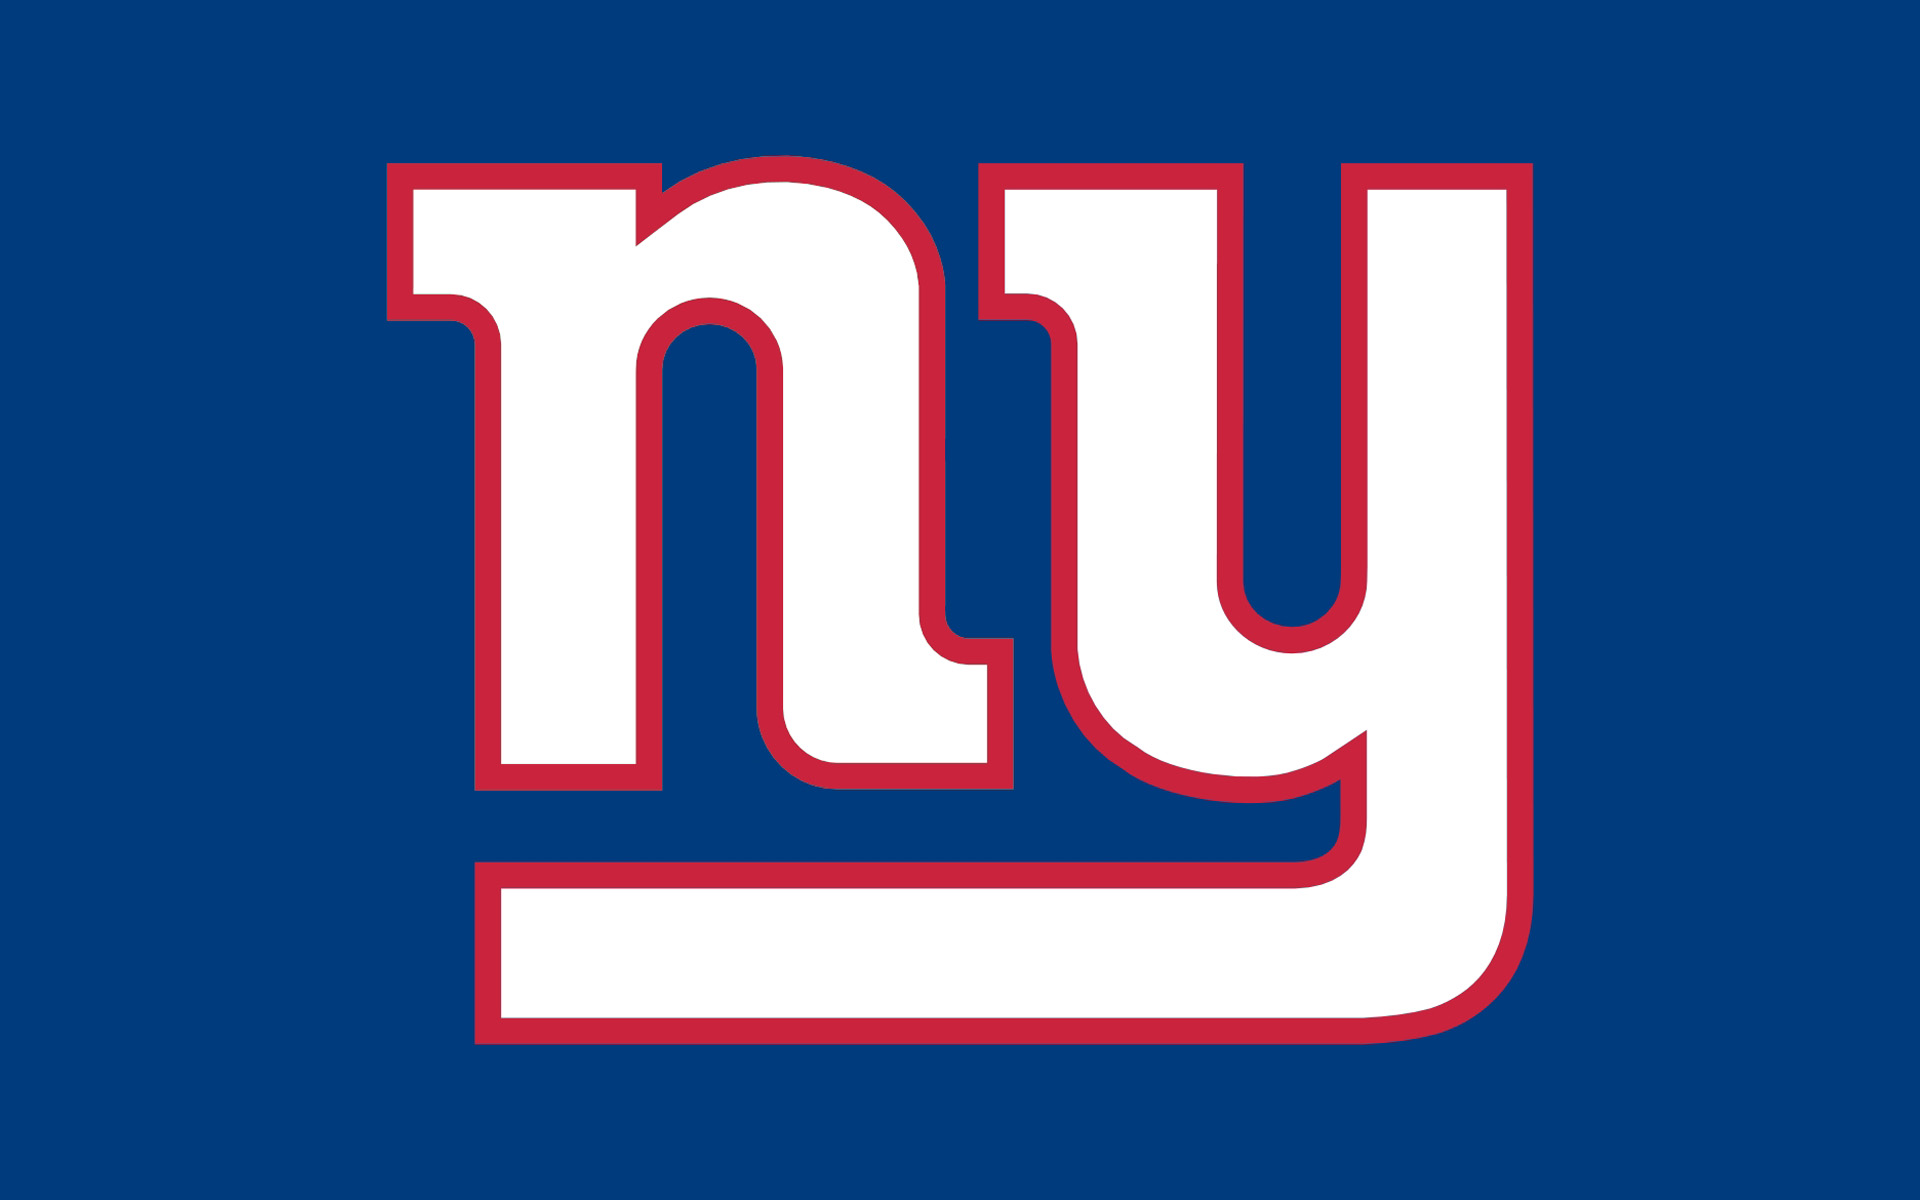 New York Giants Nfl Wide Image